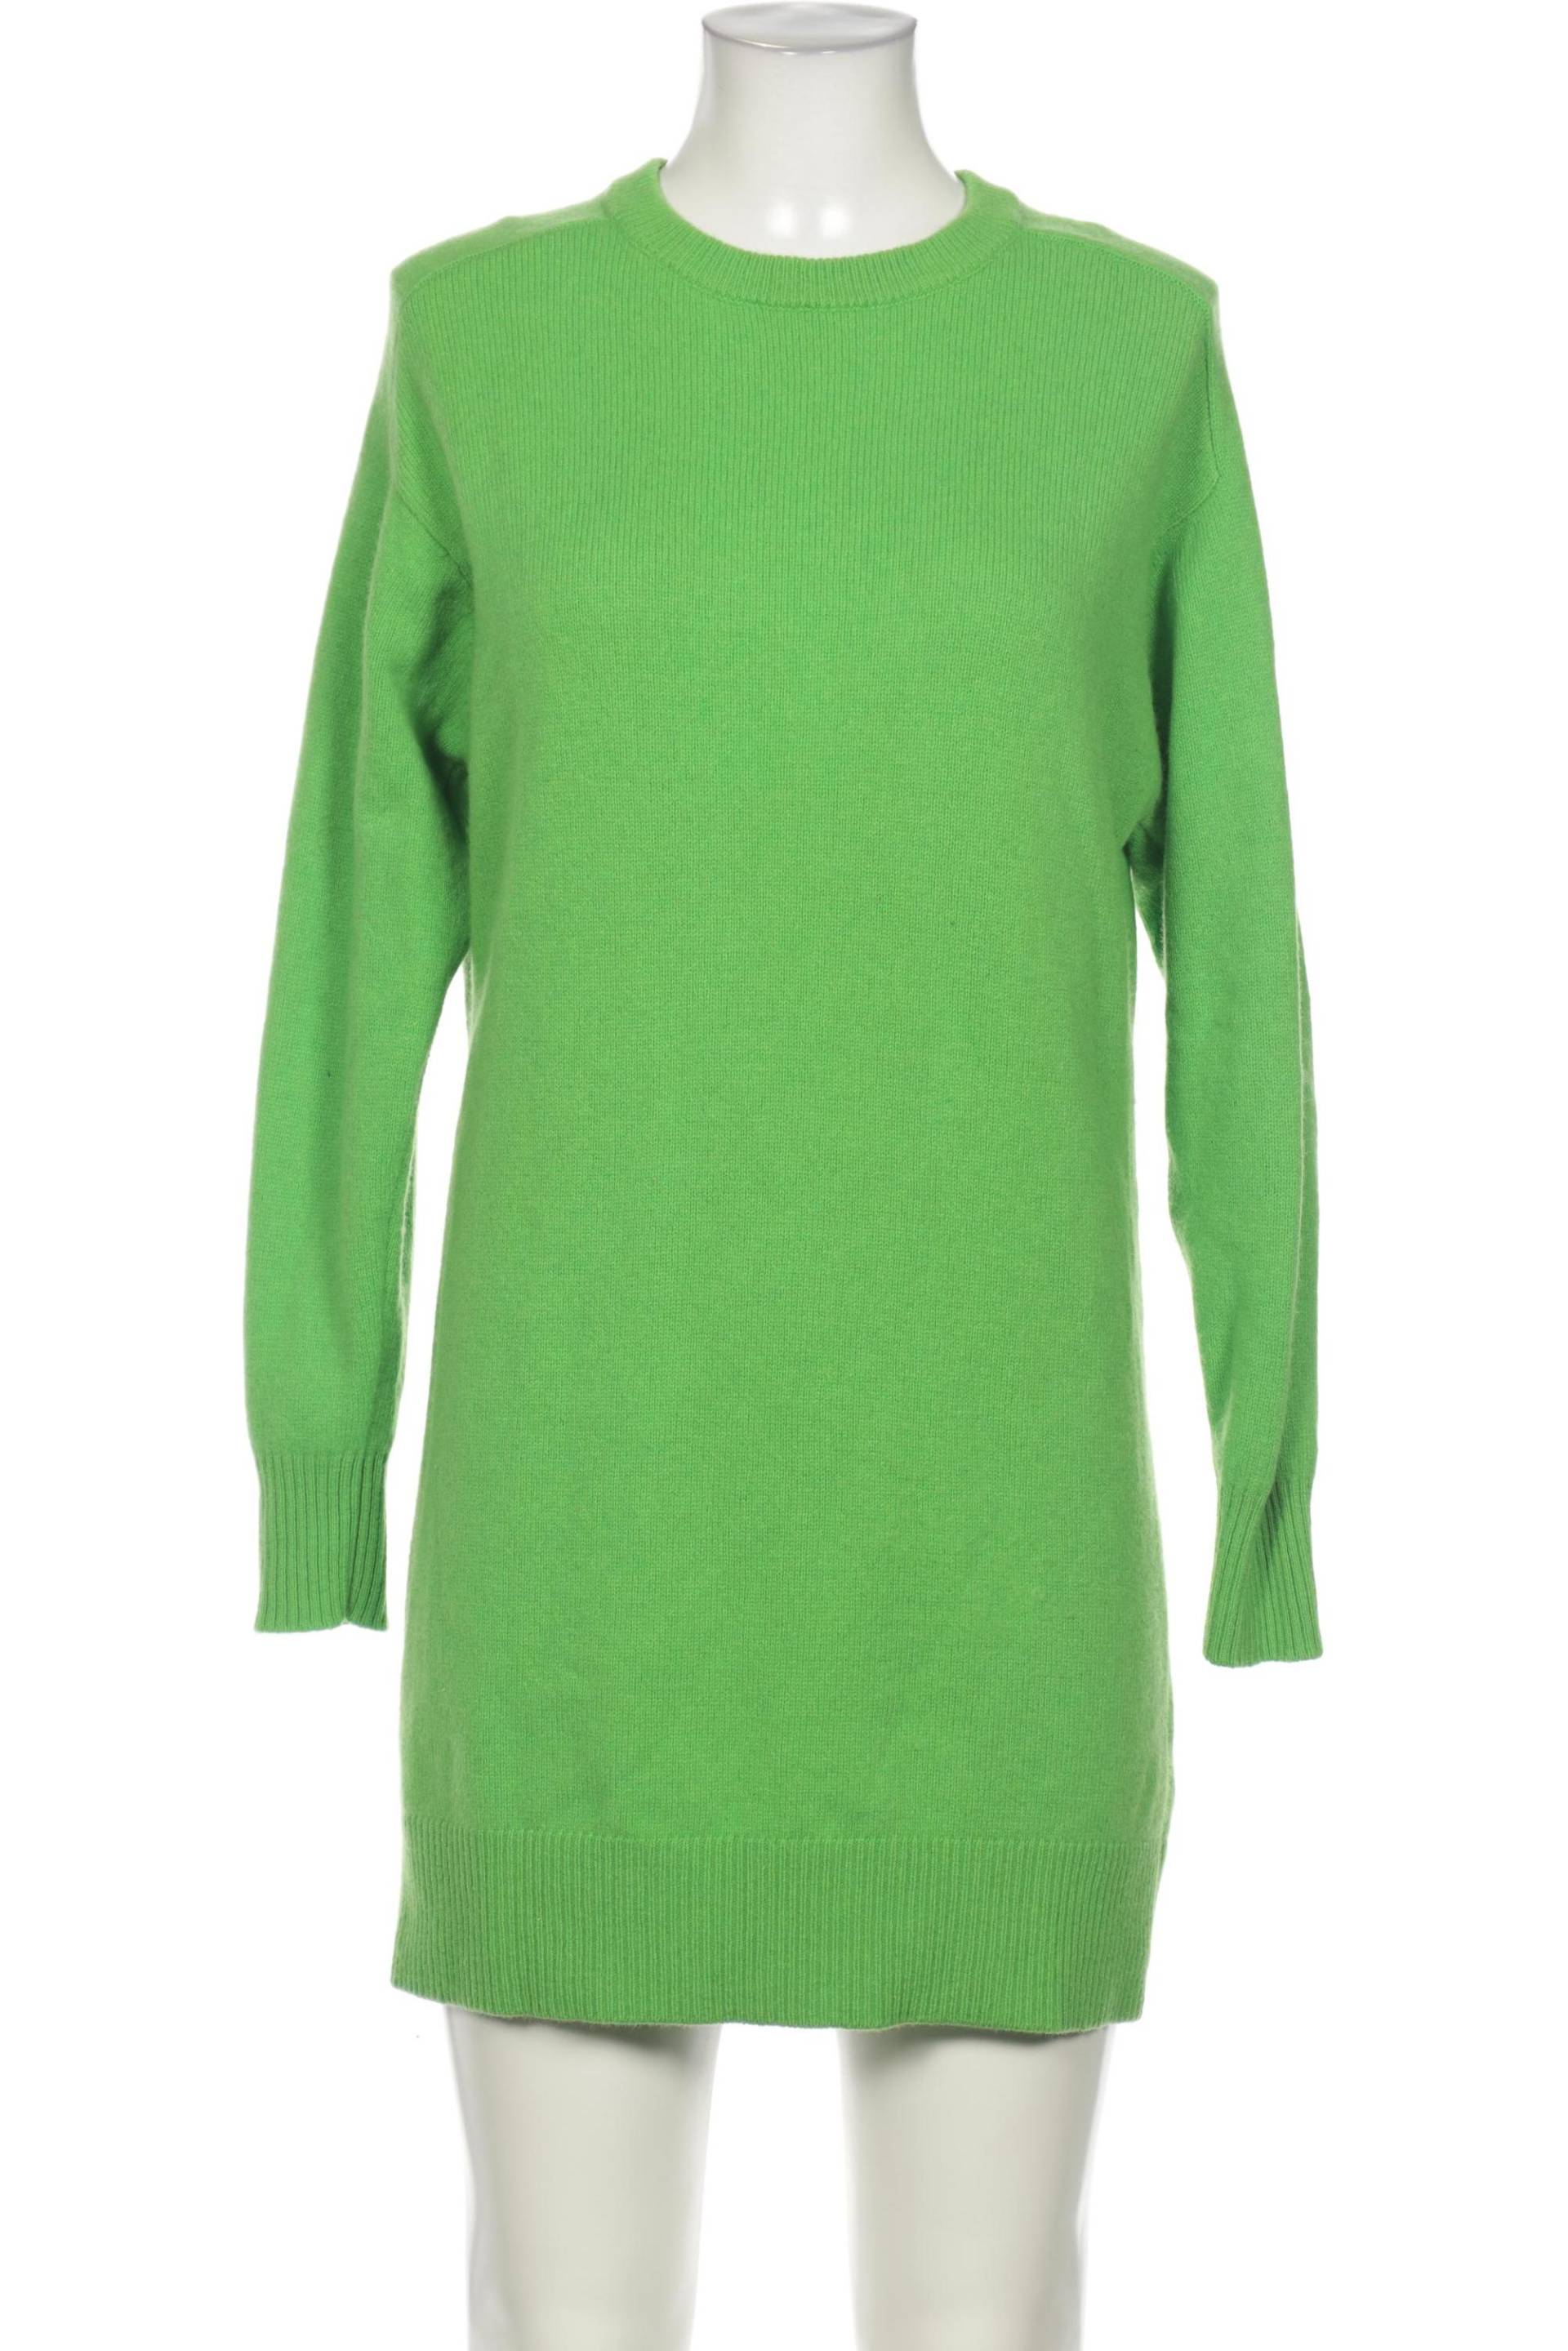 Massimo Dutti Damen Kleid, grün von Massimo Dutti